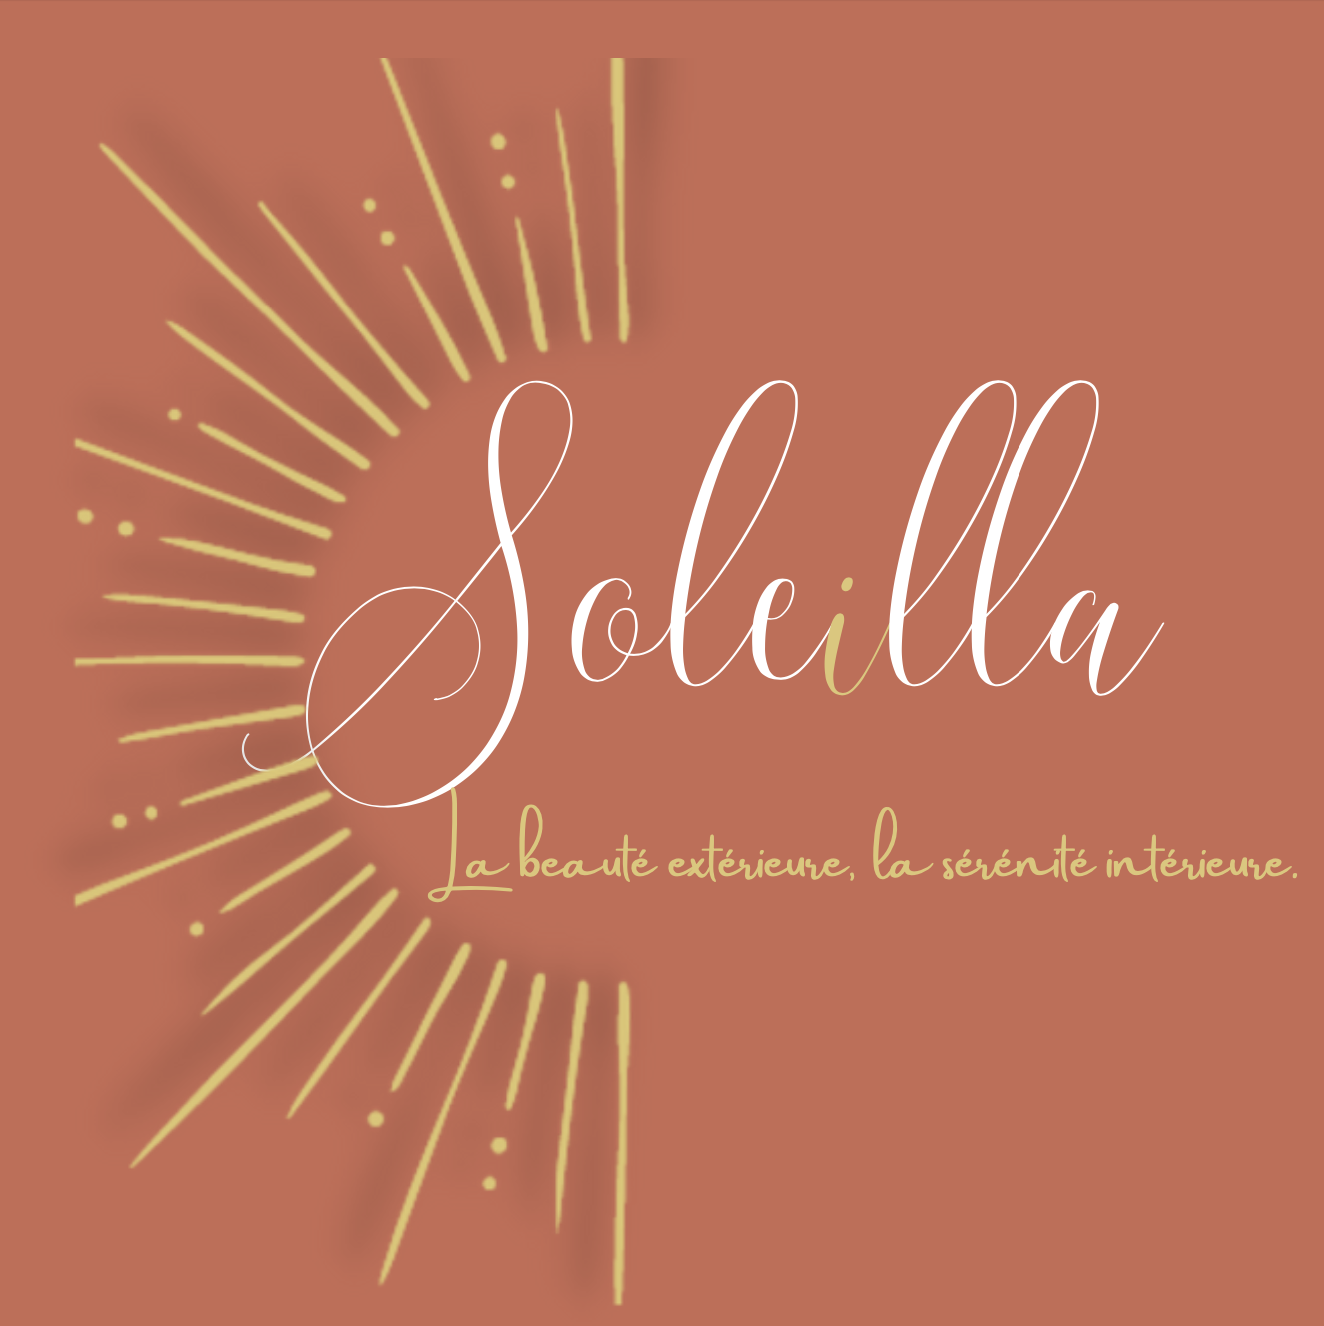 Soleilla - In-home beautician